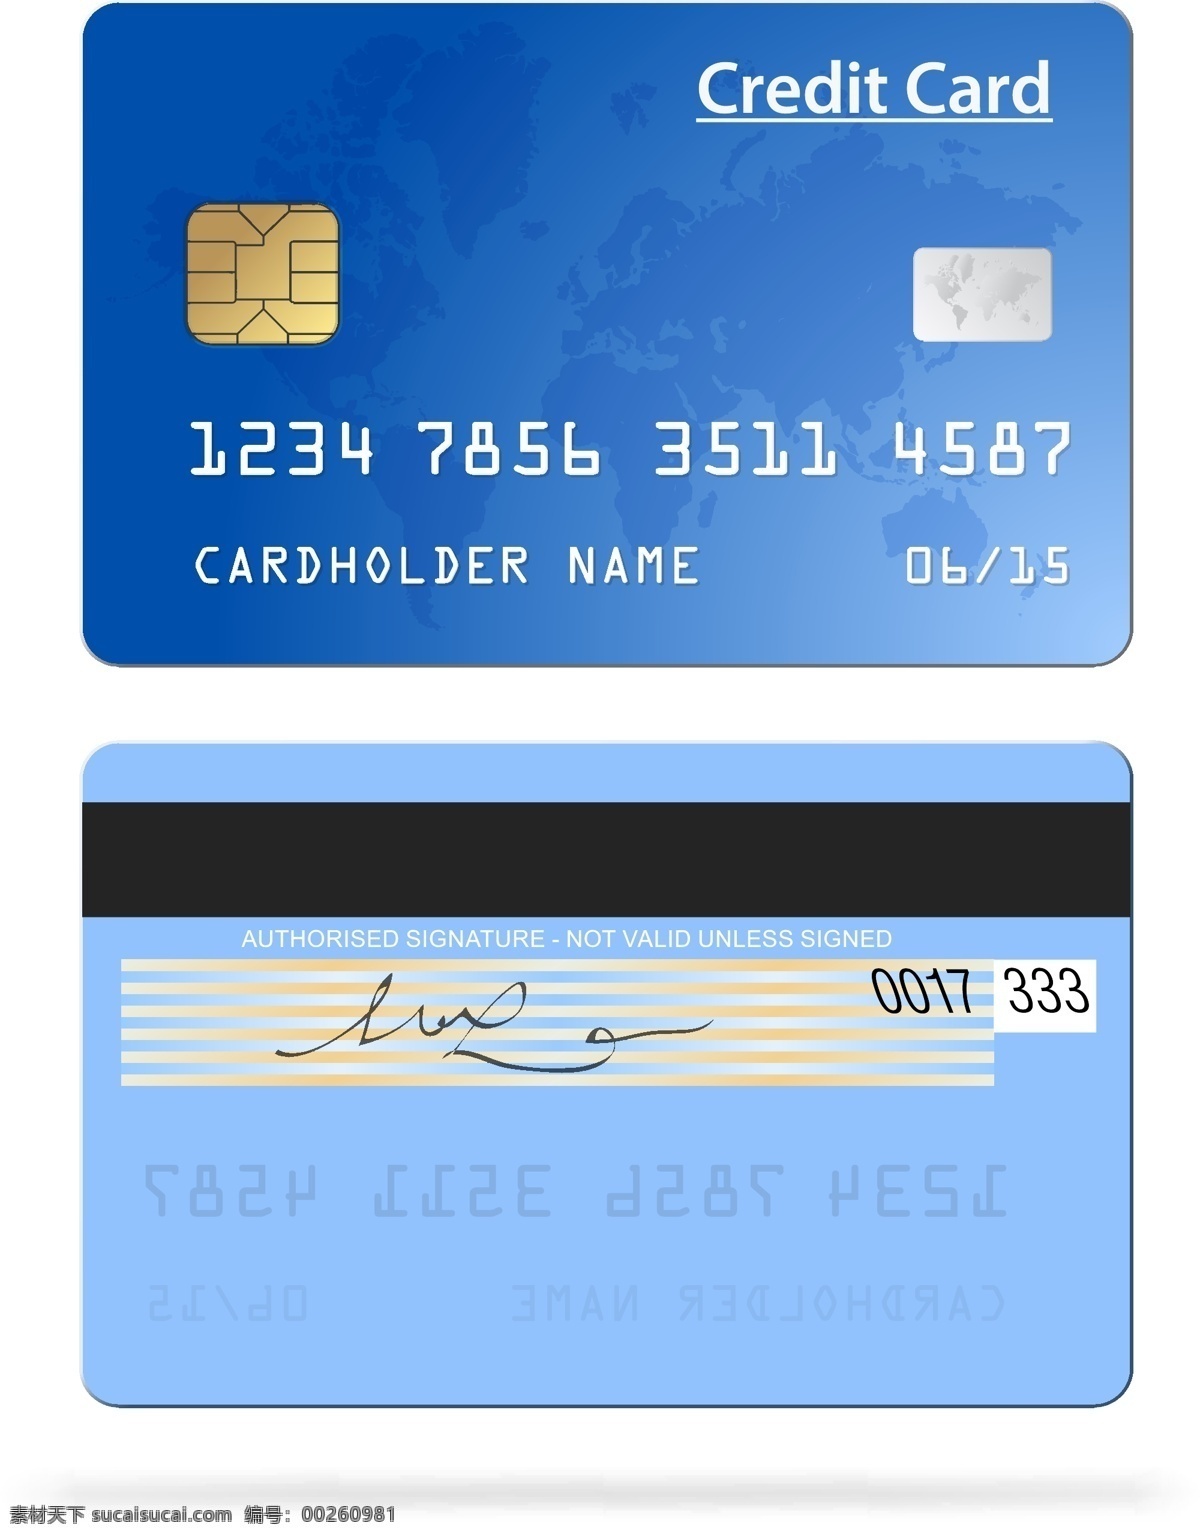 vip卡 信用卡 磁条卡 芯片卡 信用卡设计 自主设计 借记卡 卡面设计 卡片 证券 尊贵体验 银行 建设银行 金融 全方位 全面 白金卡 中国银行卡 中国行用卡 广发卡 广发信用卡 地方卡 龙卡